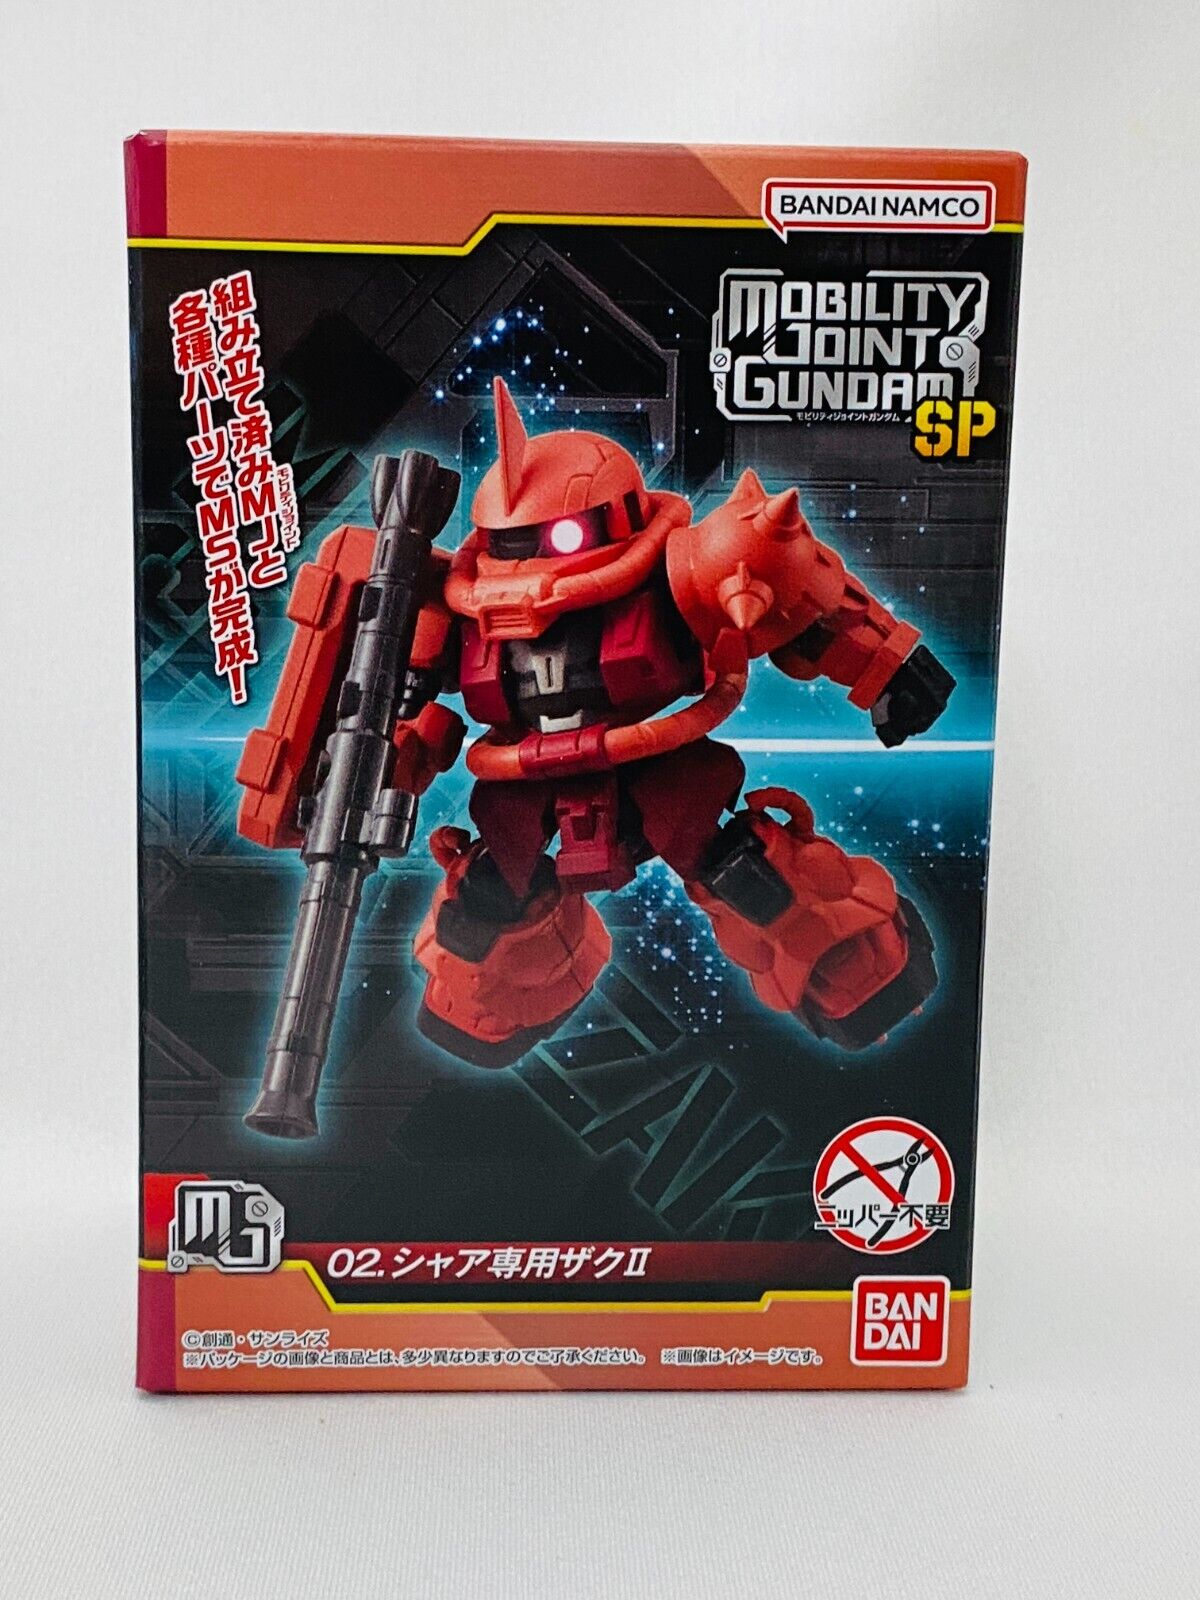 FW MOBILITY JOINT GUNDAM SP / 2. Char's Zaku II / BANDAI Collection Figure toy